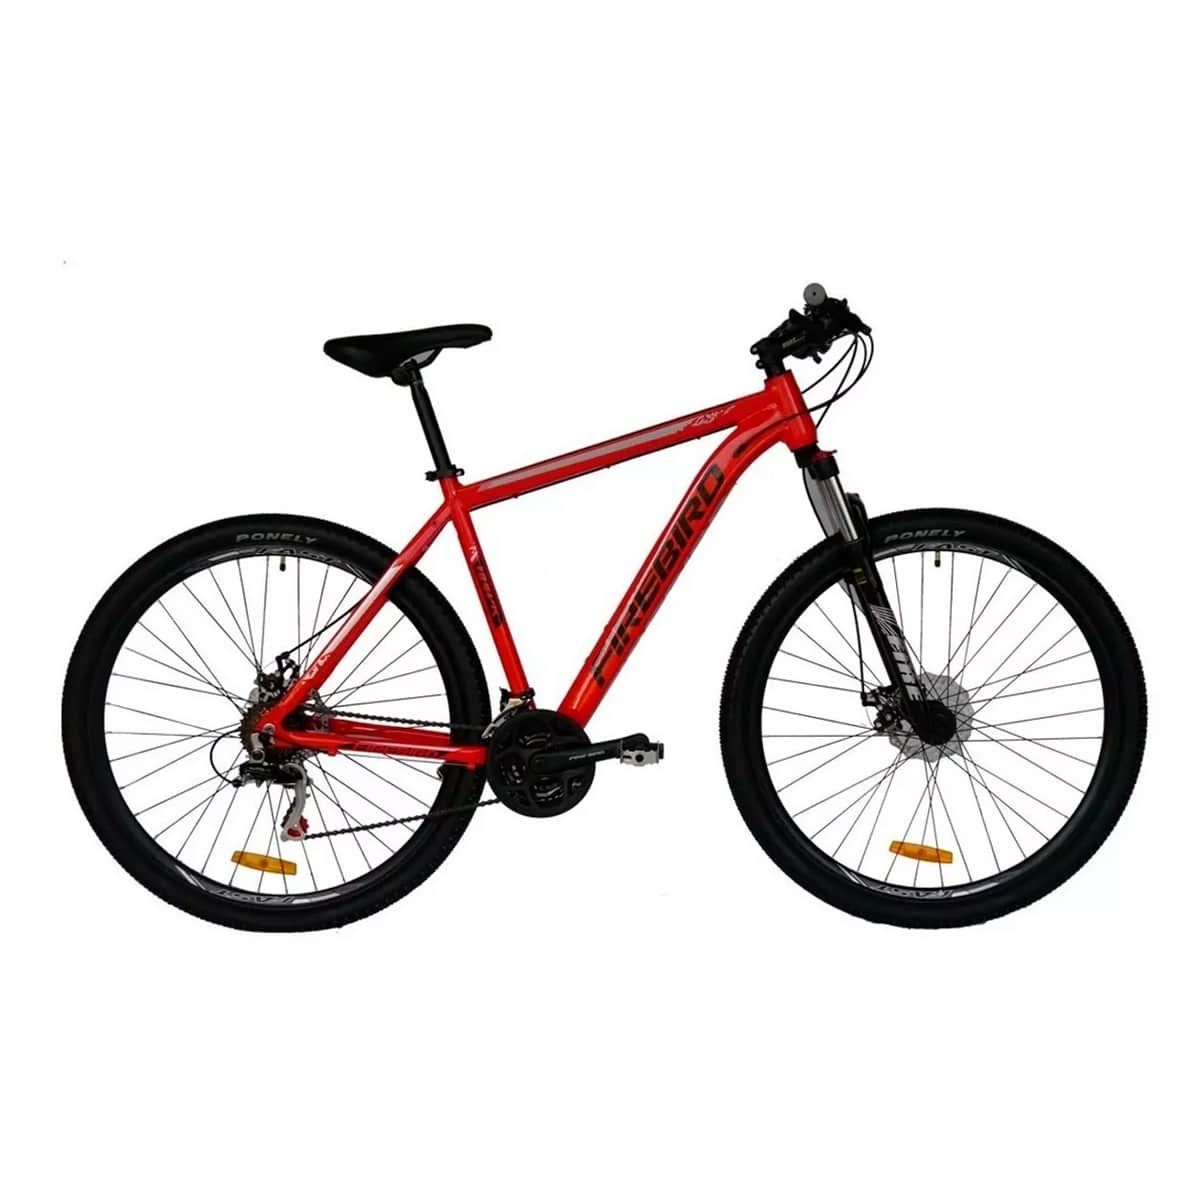 Bicicleta Adulto Fire Bird R29 21V Color Rojo/Negro Talle M